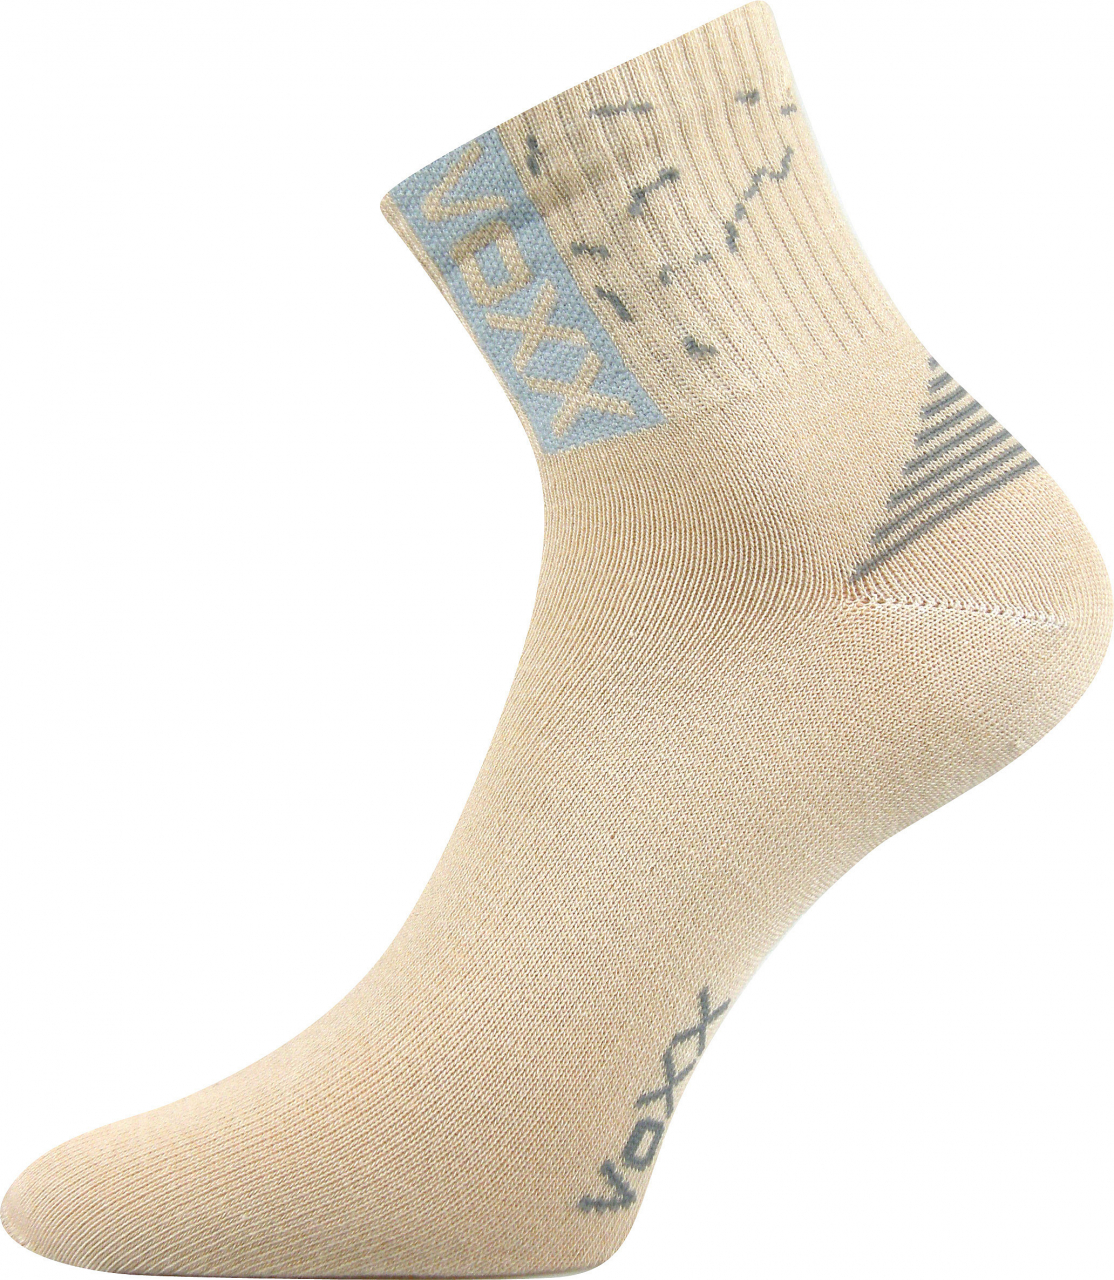 Ponožky sportovní Voxx Codex - béžové, 35-38